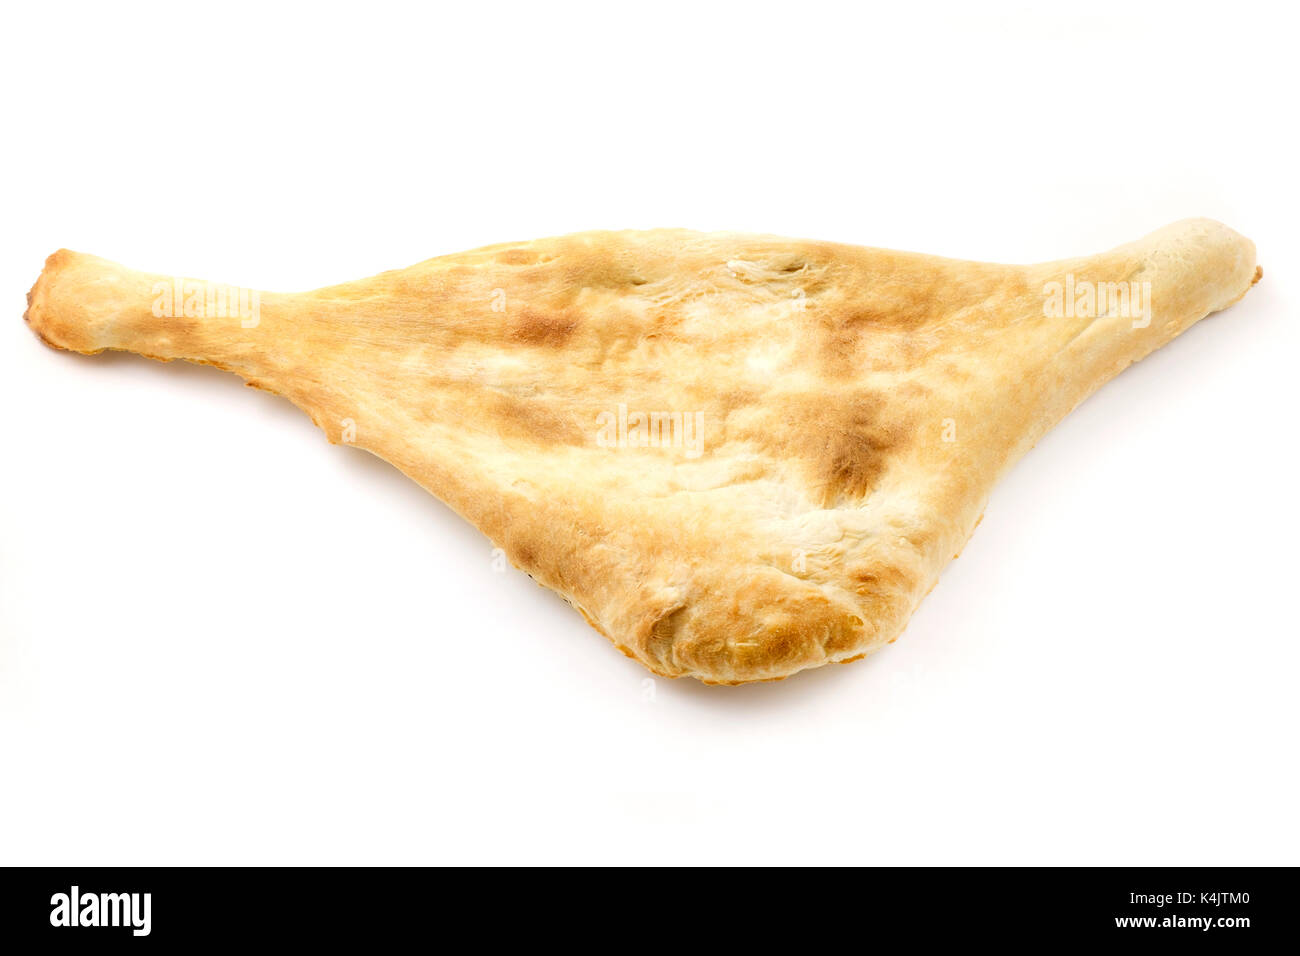 Strange shaped bread on a white background Stock Photo - Alamy